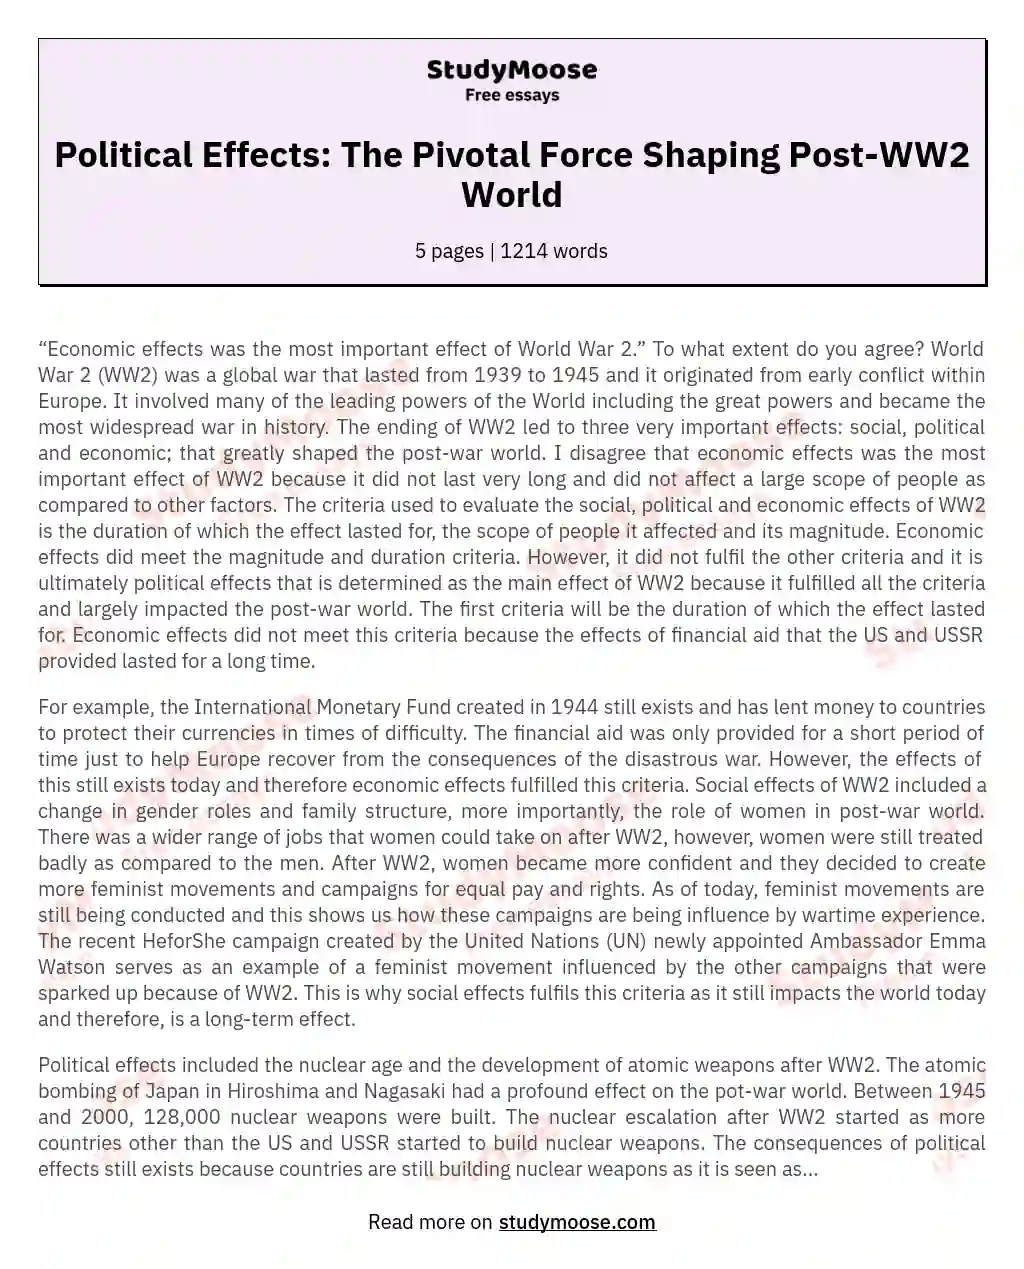 world war 2 essay